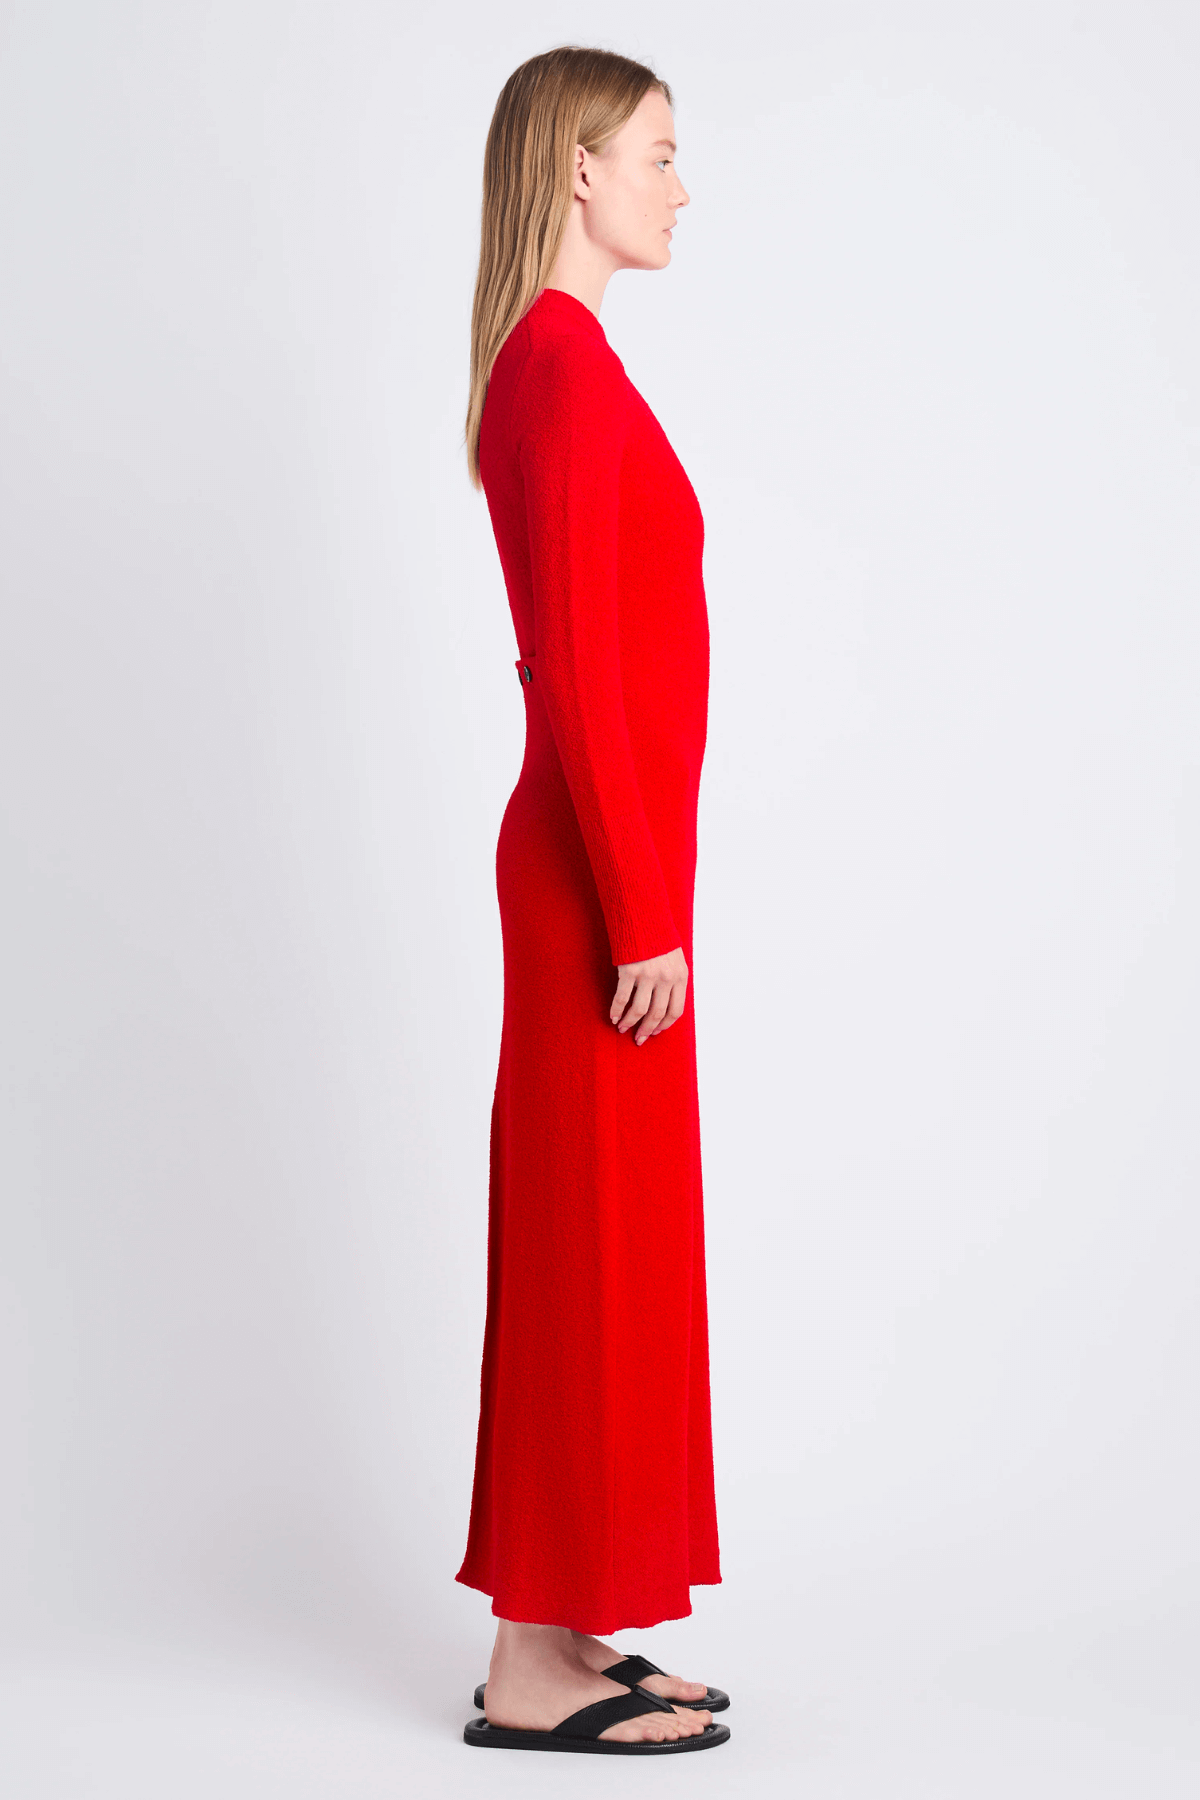 Proenza Schouler Lara Boucle Knit Dress - Red